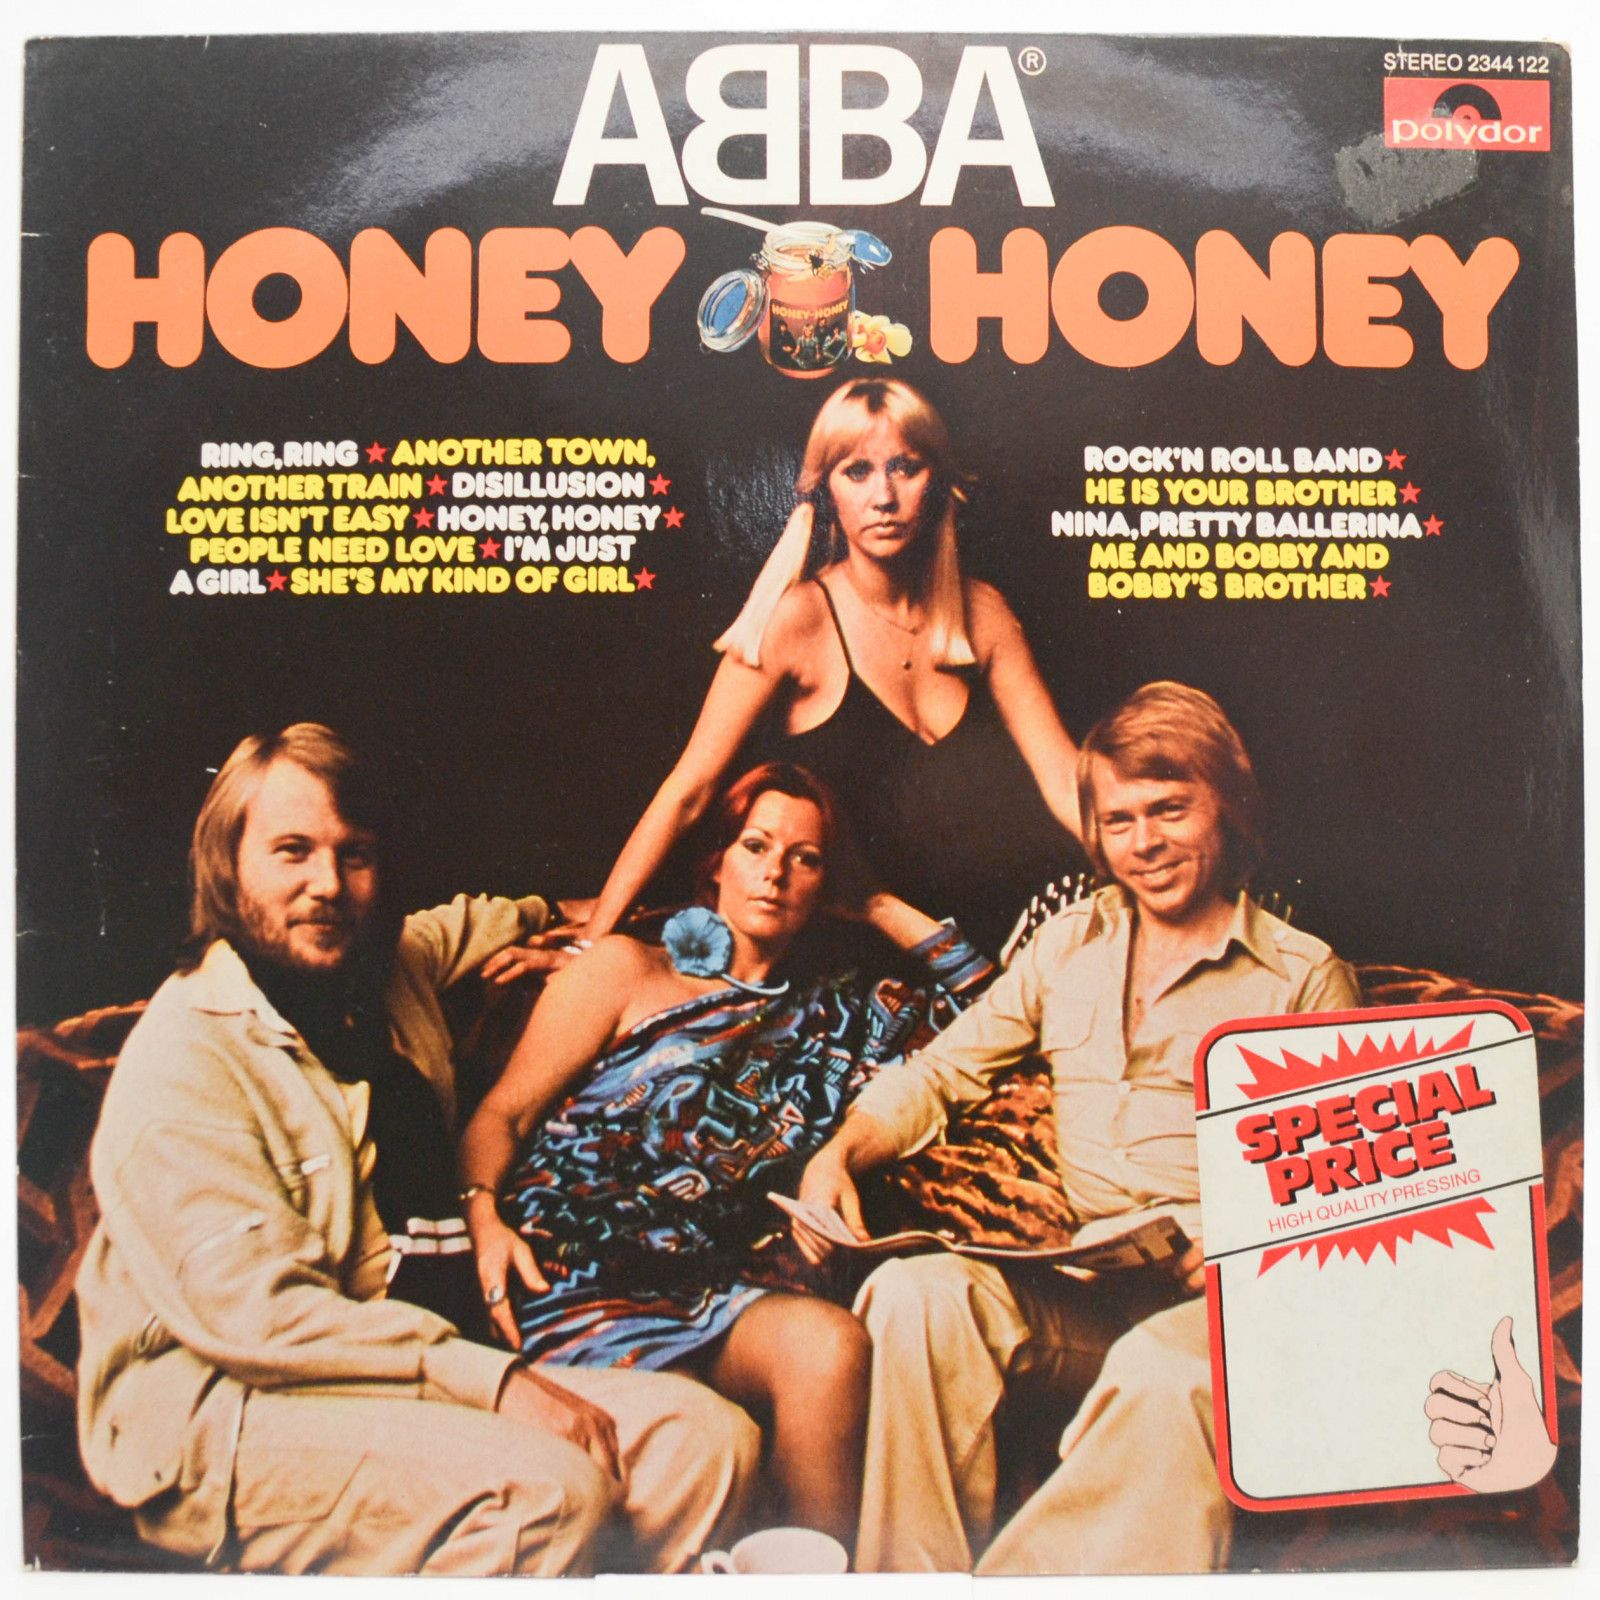 ABBA — Honey, Honey, 1979